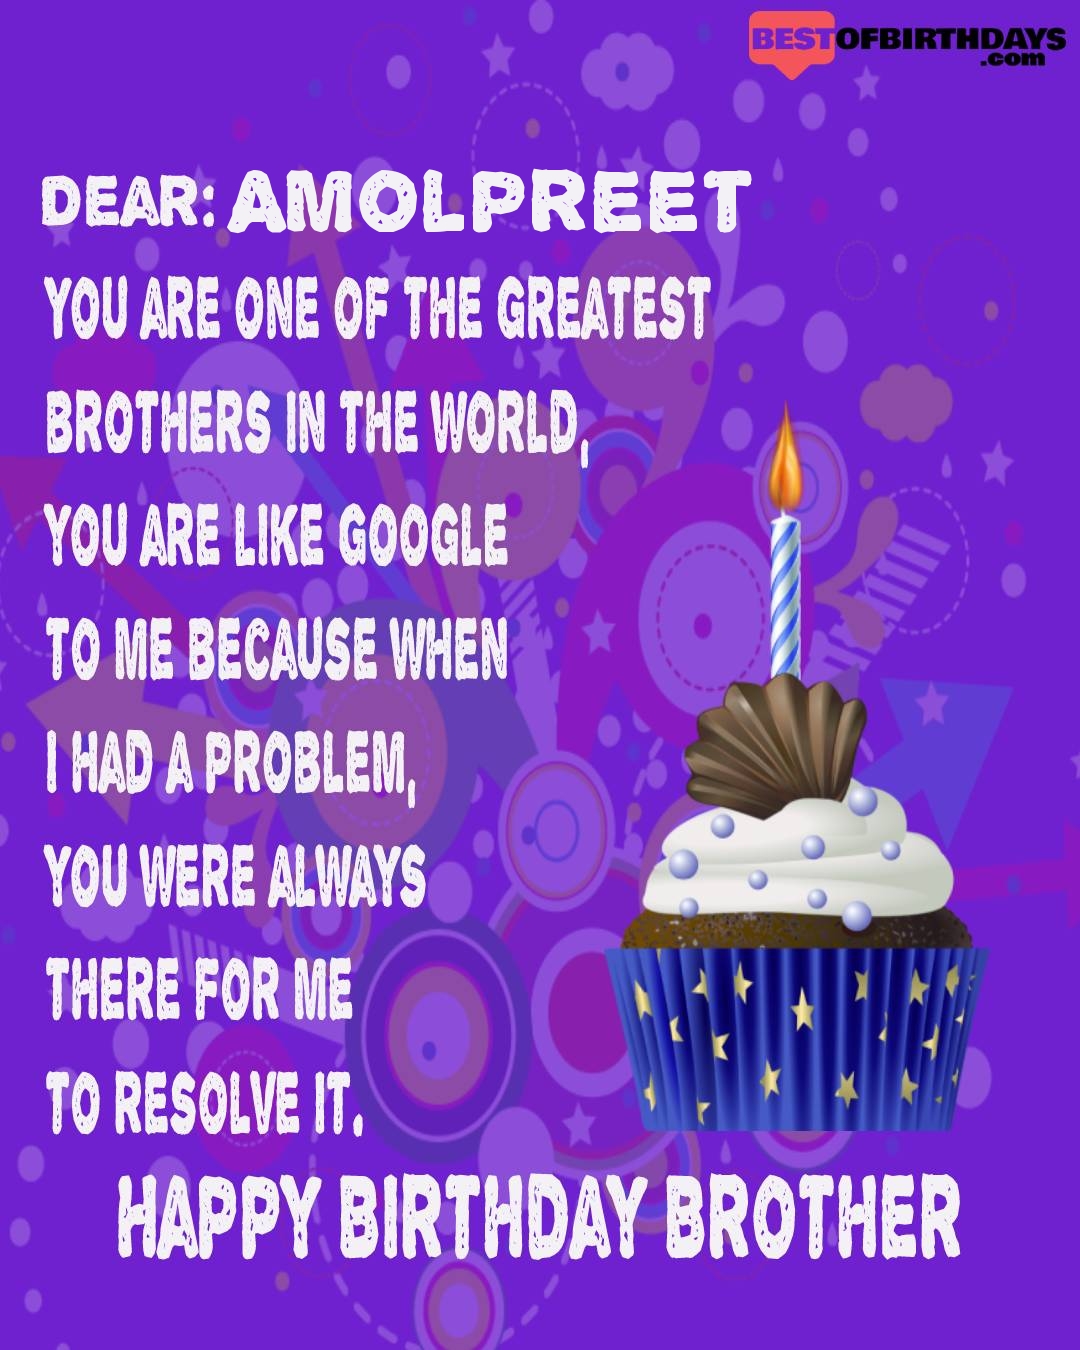 Happy birthday amolpreet bhai brother bro